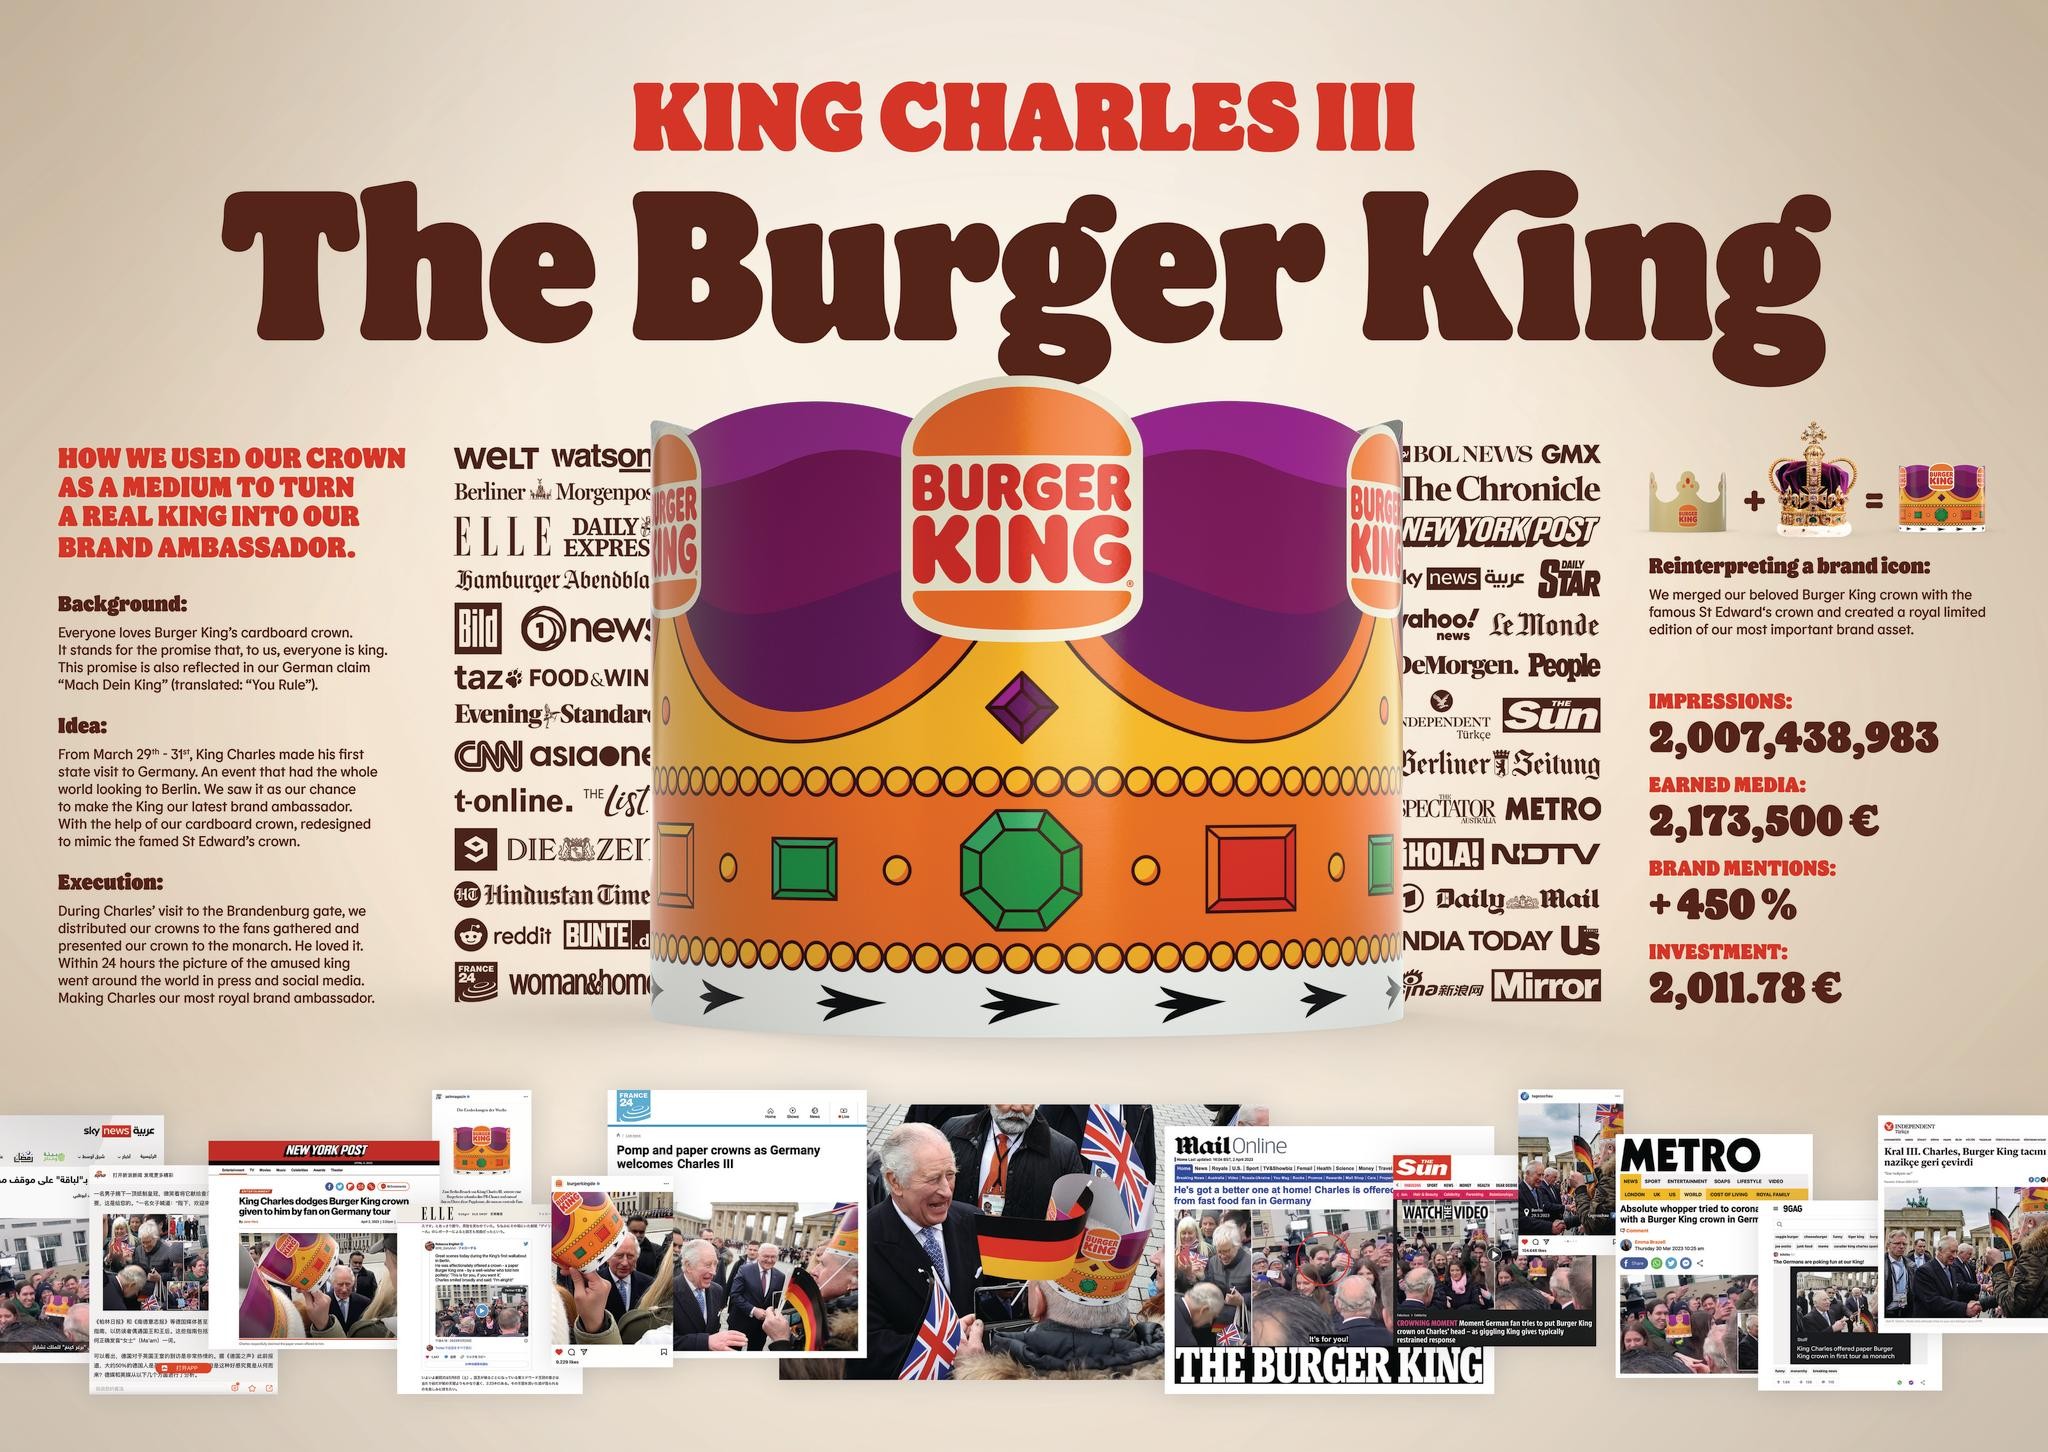 "Charles III – The Burger King"